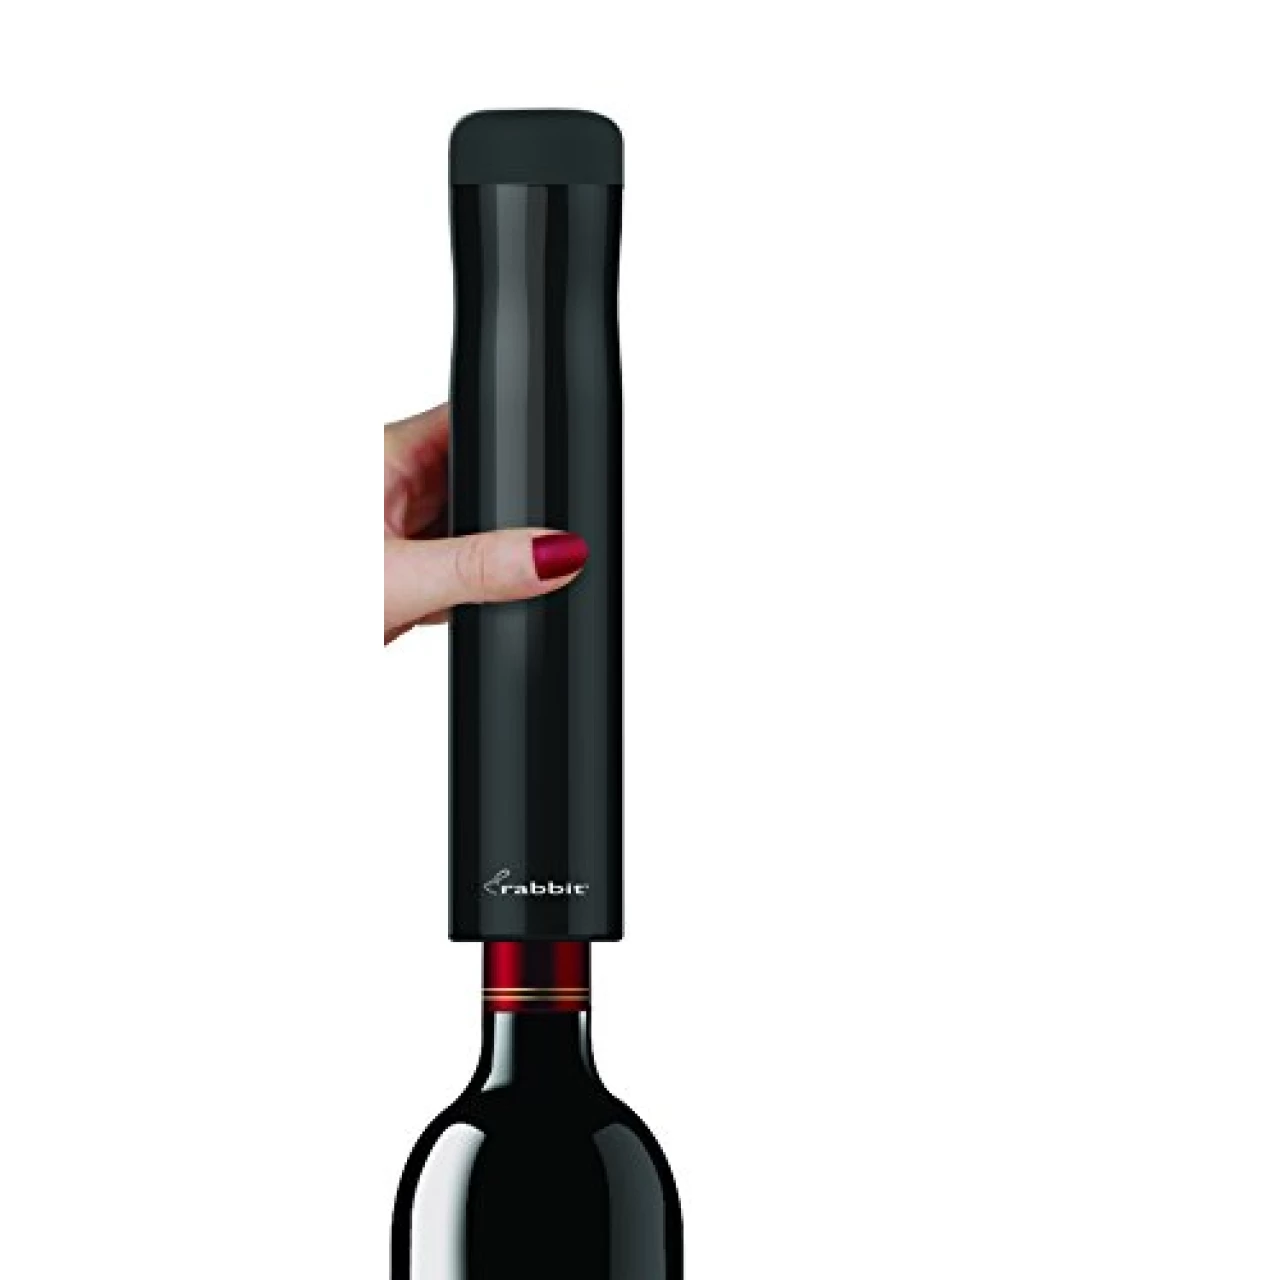 Rabbit Automatic Electric Corkscrew Wine Bottle Opener, One Size, Shiny Black